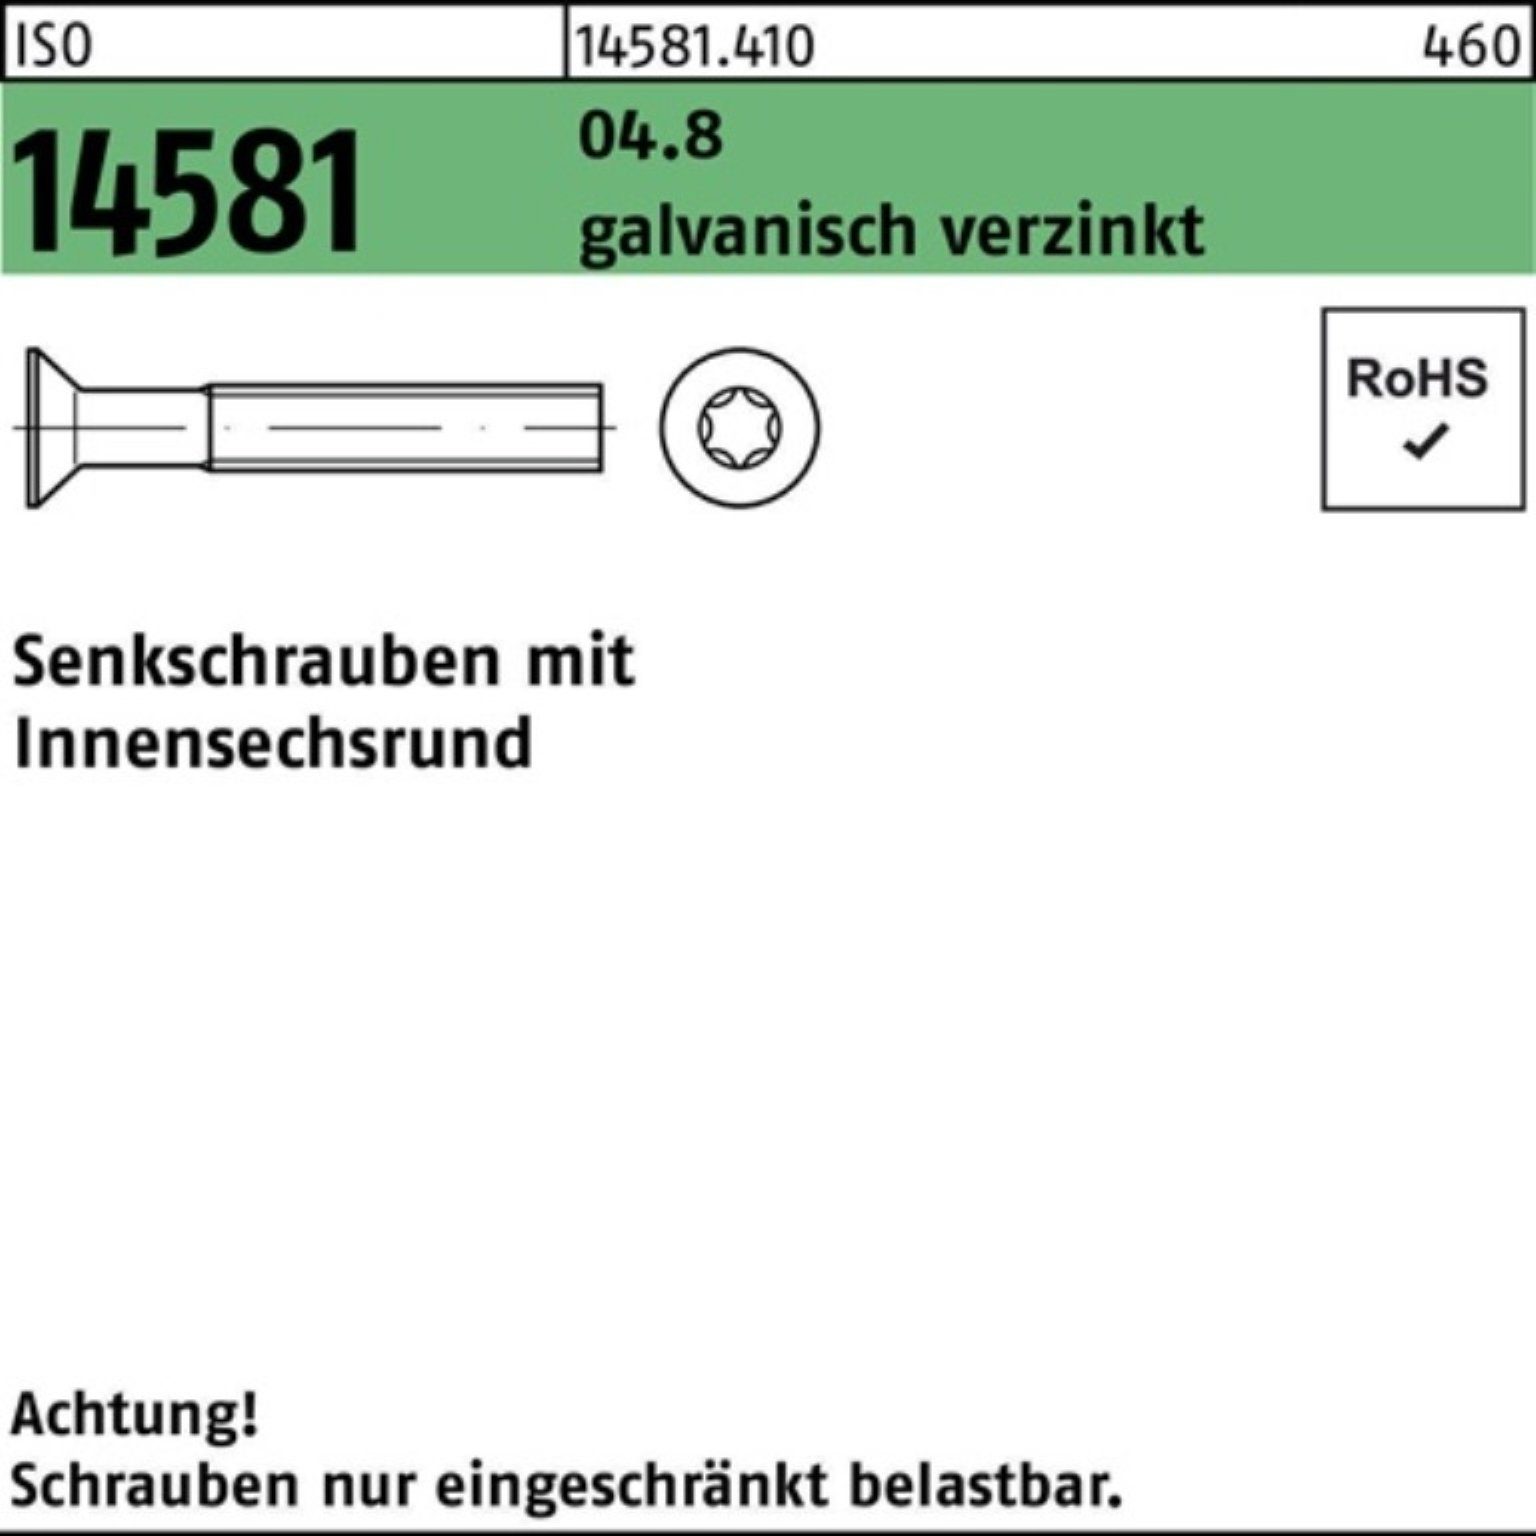 Reyher ISR Senkschraube 04.8 M3x25 14581 2000S T10 Pack 2000er galv.verz. Senkschraube ISO